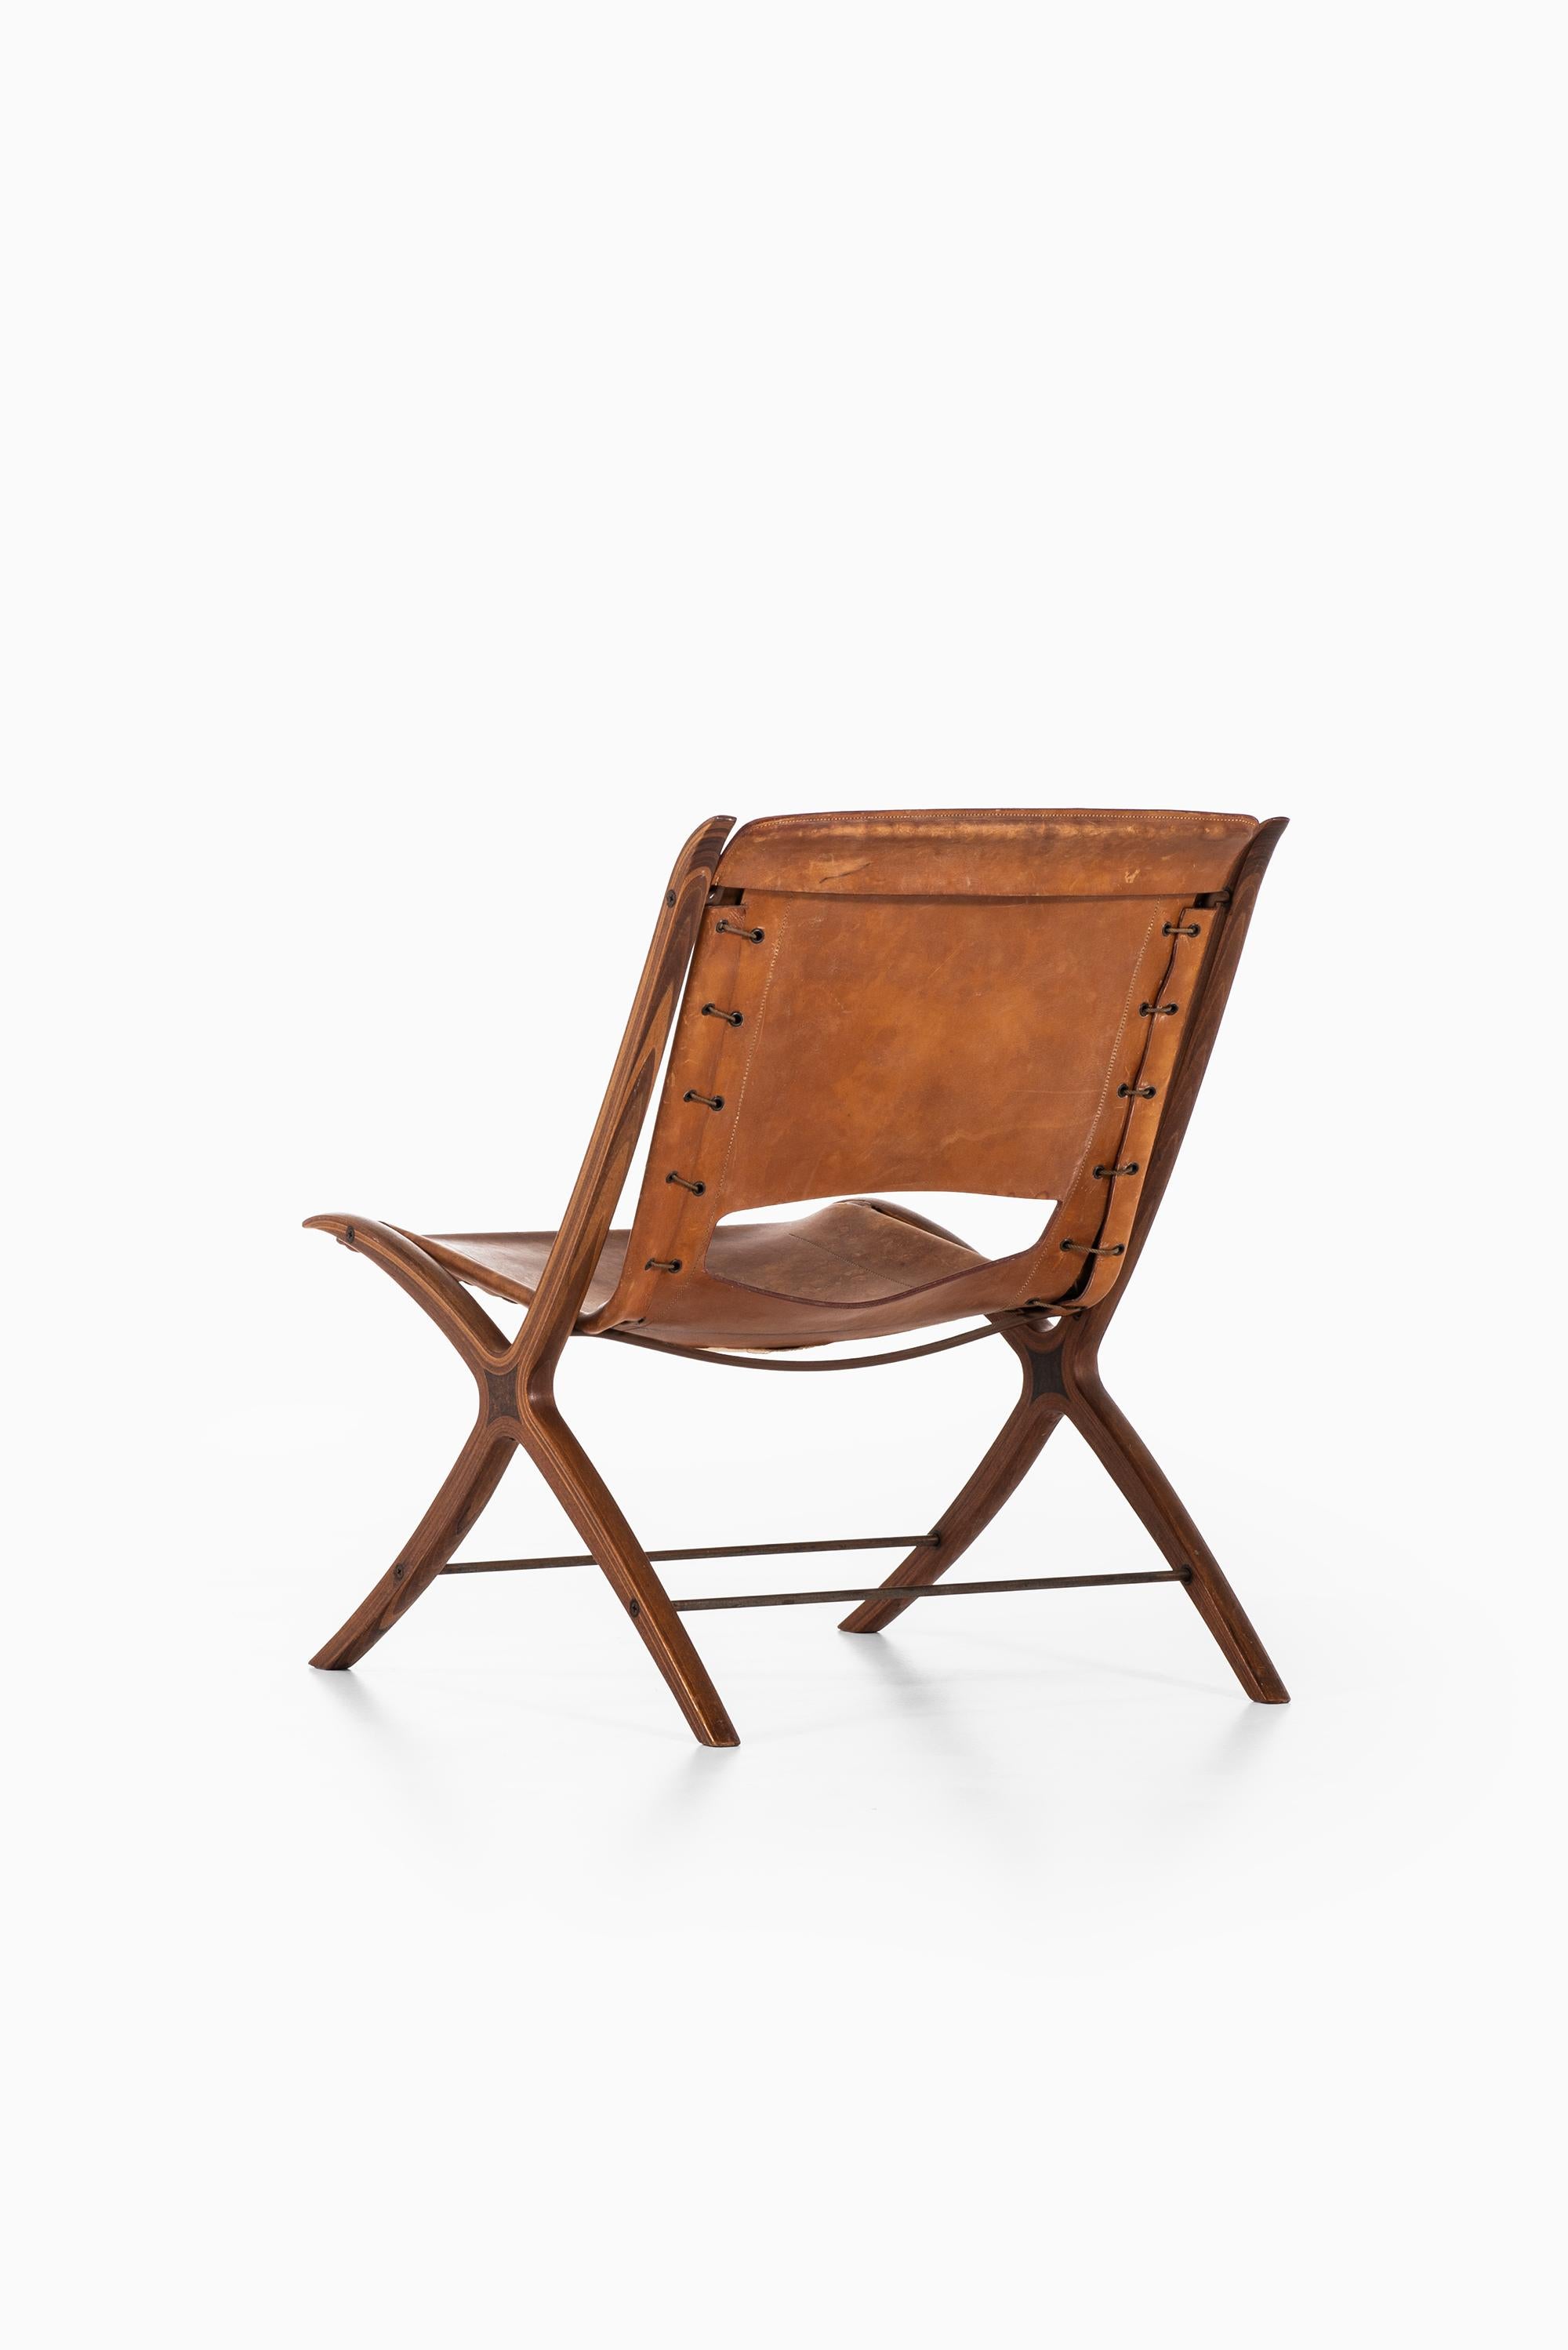 Peter Hvidt & Orla Mølgaard-Nielsen Easy Chair Model Fh-6135 / X-Chair For Sale 2